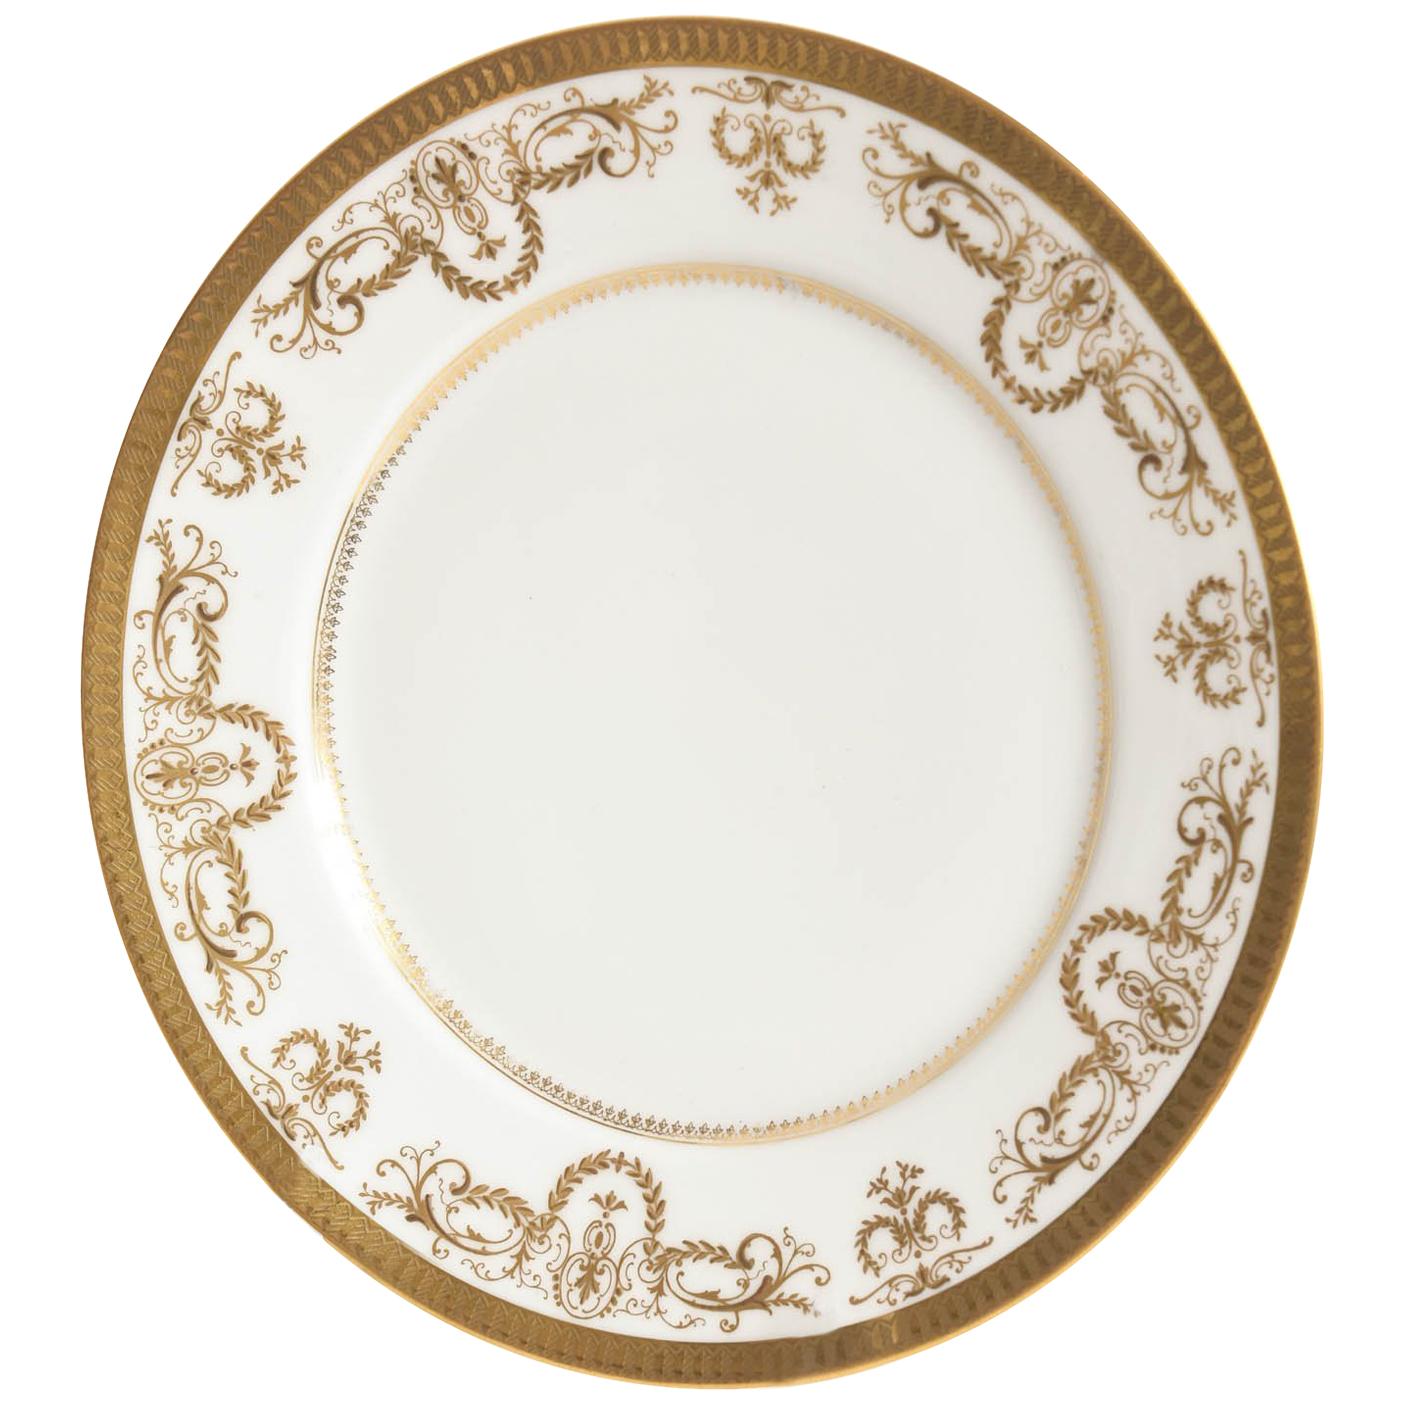 Set of 10 Dessert Plates White and Gold, Limoges France, Antique